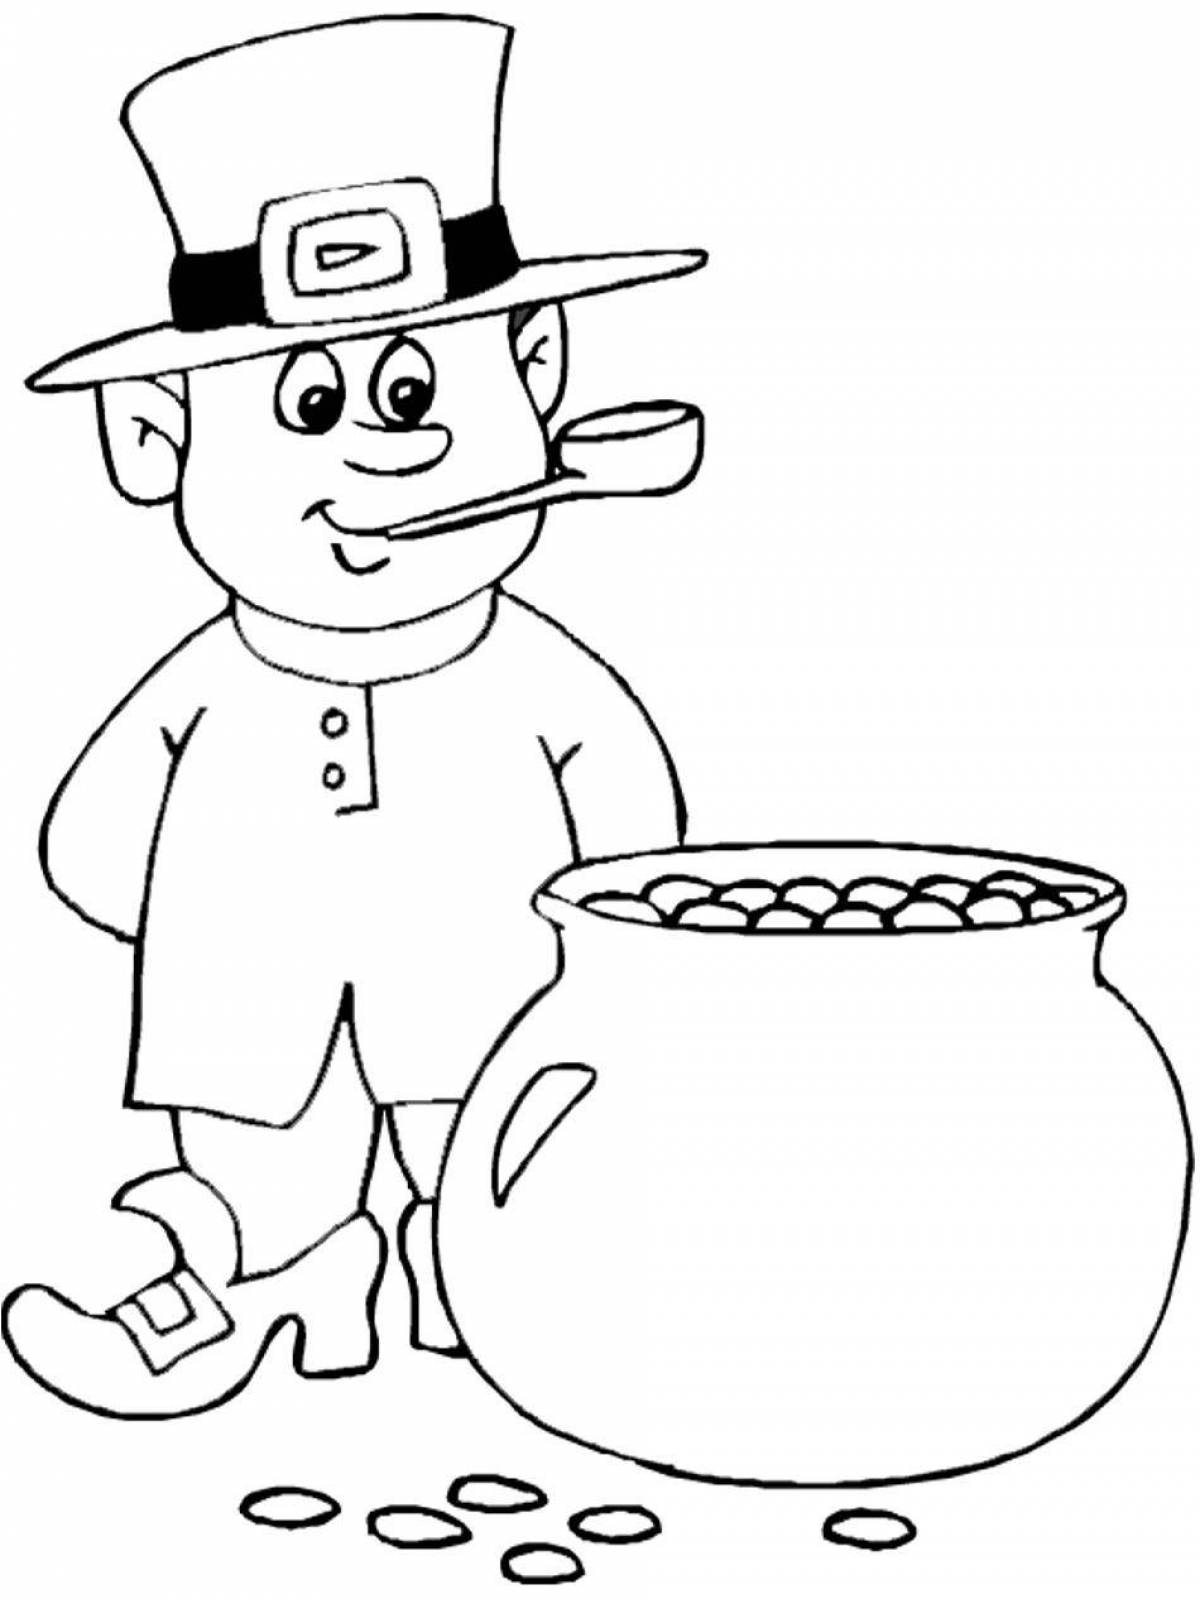 Educational coloring pot